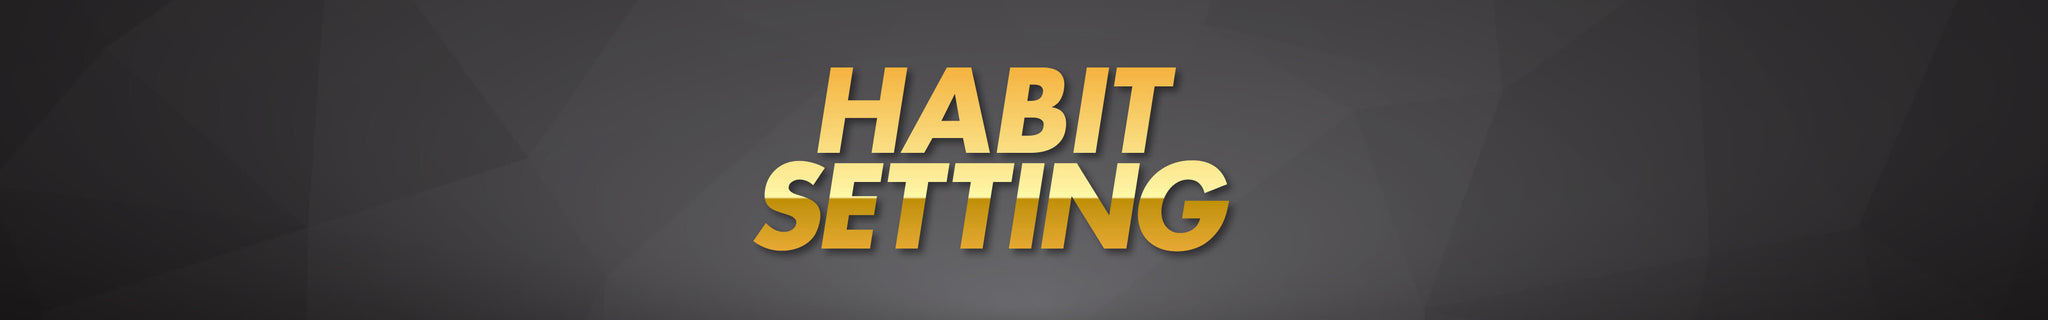 Habit Setting